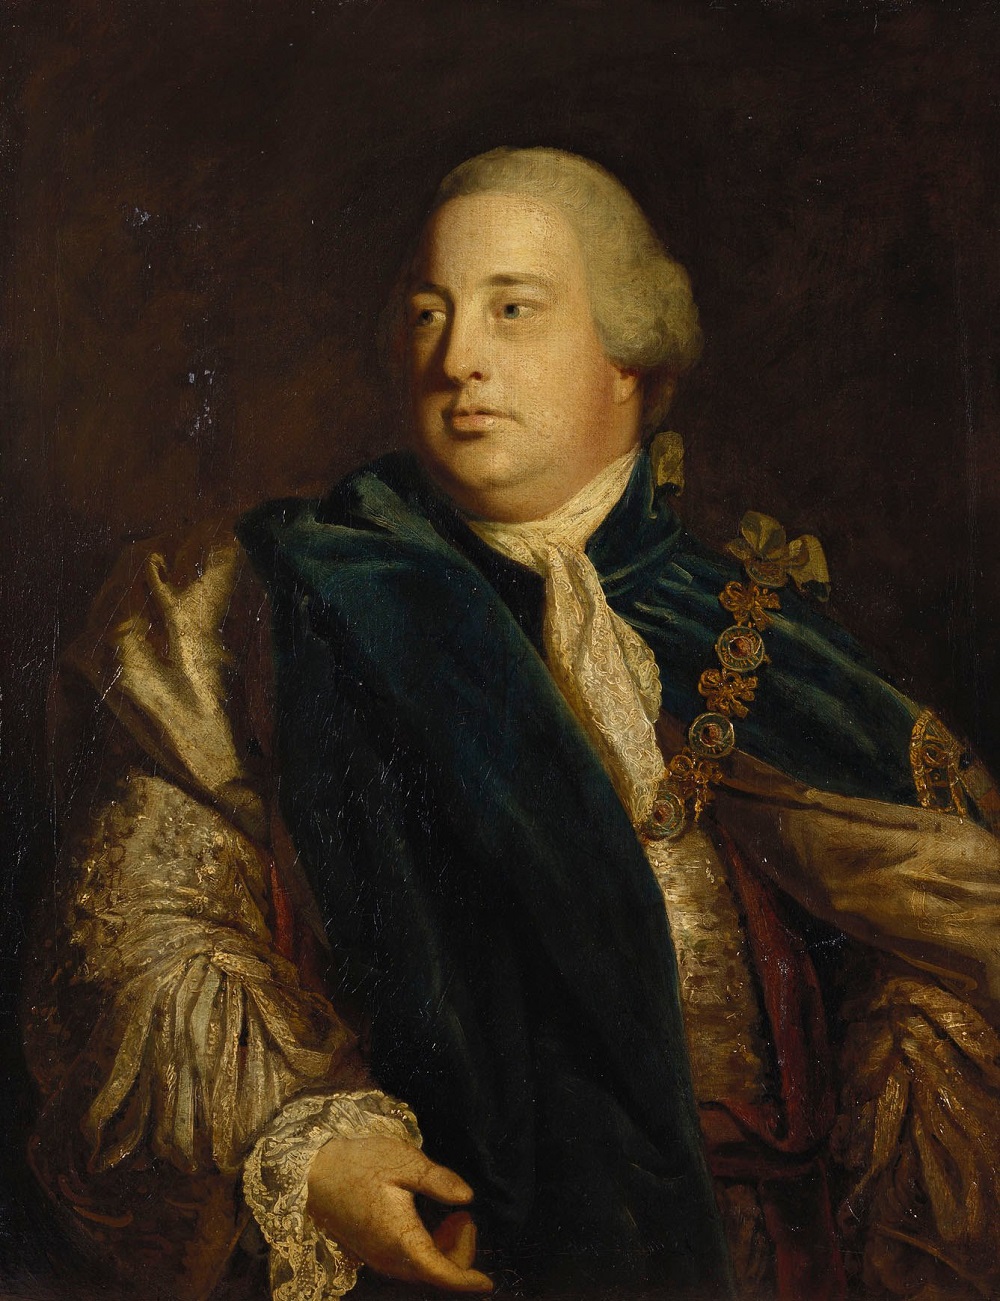 Artist portrait of William Augustus, Duke of Cumberland by Sir Joshua Reynolds.